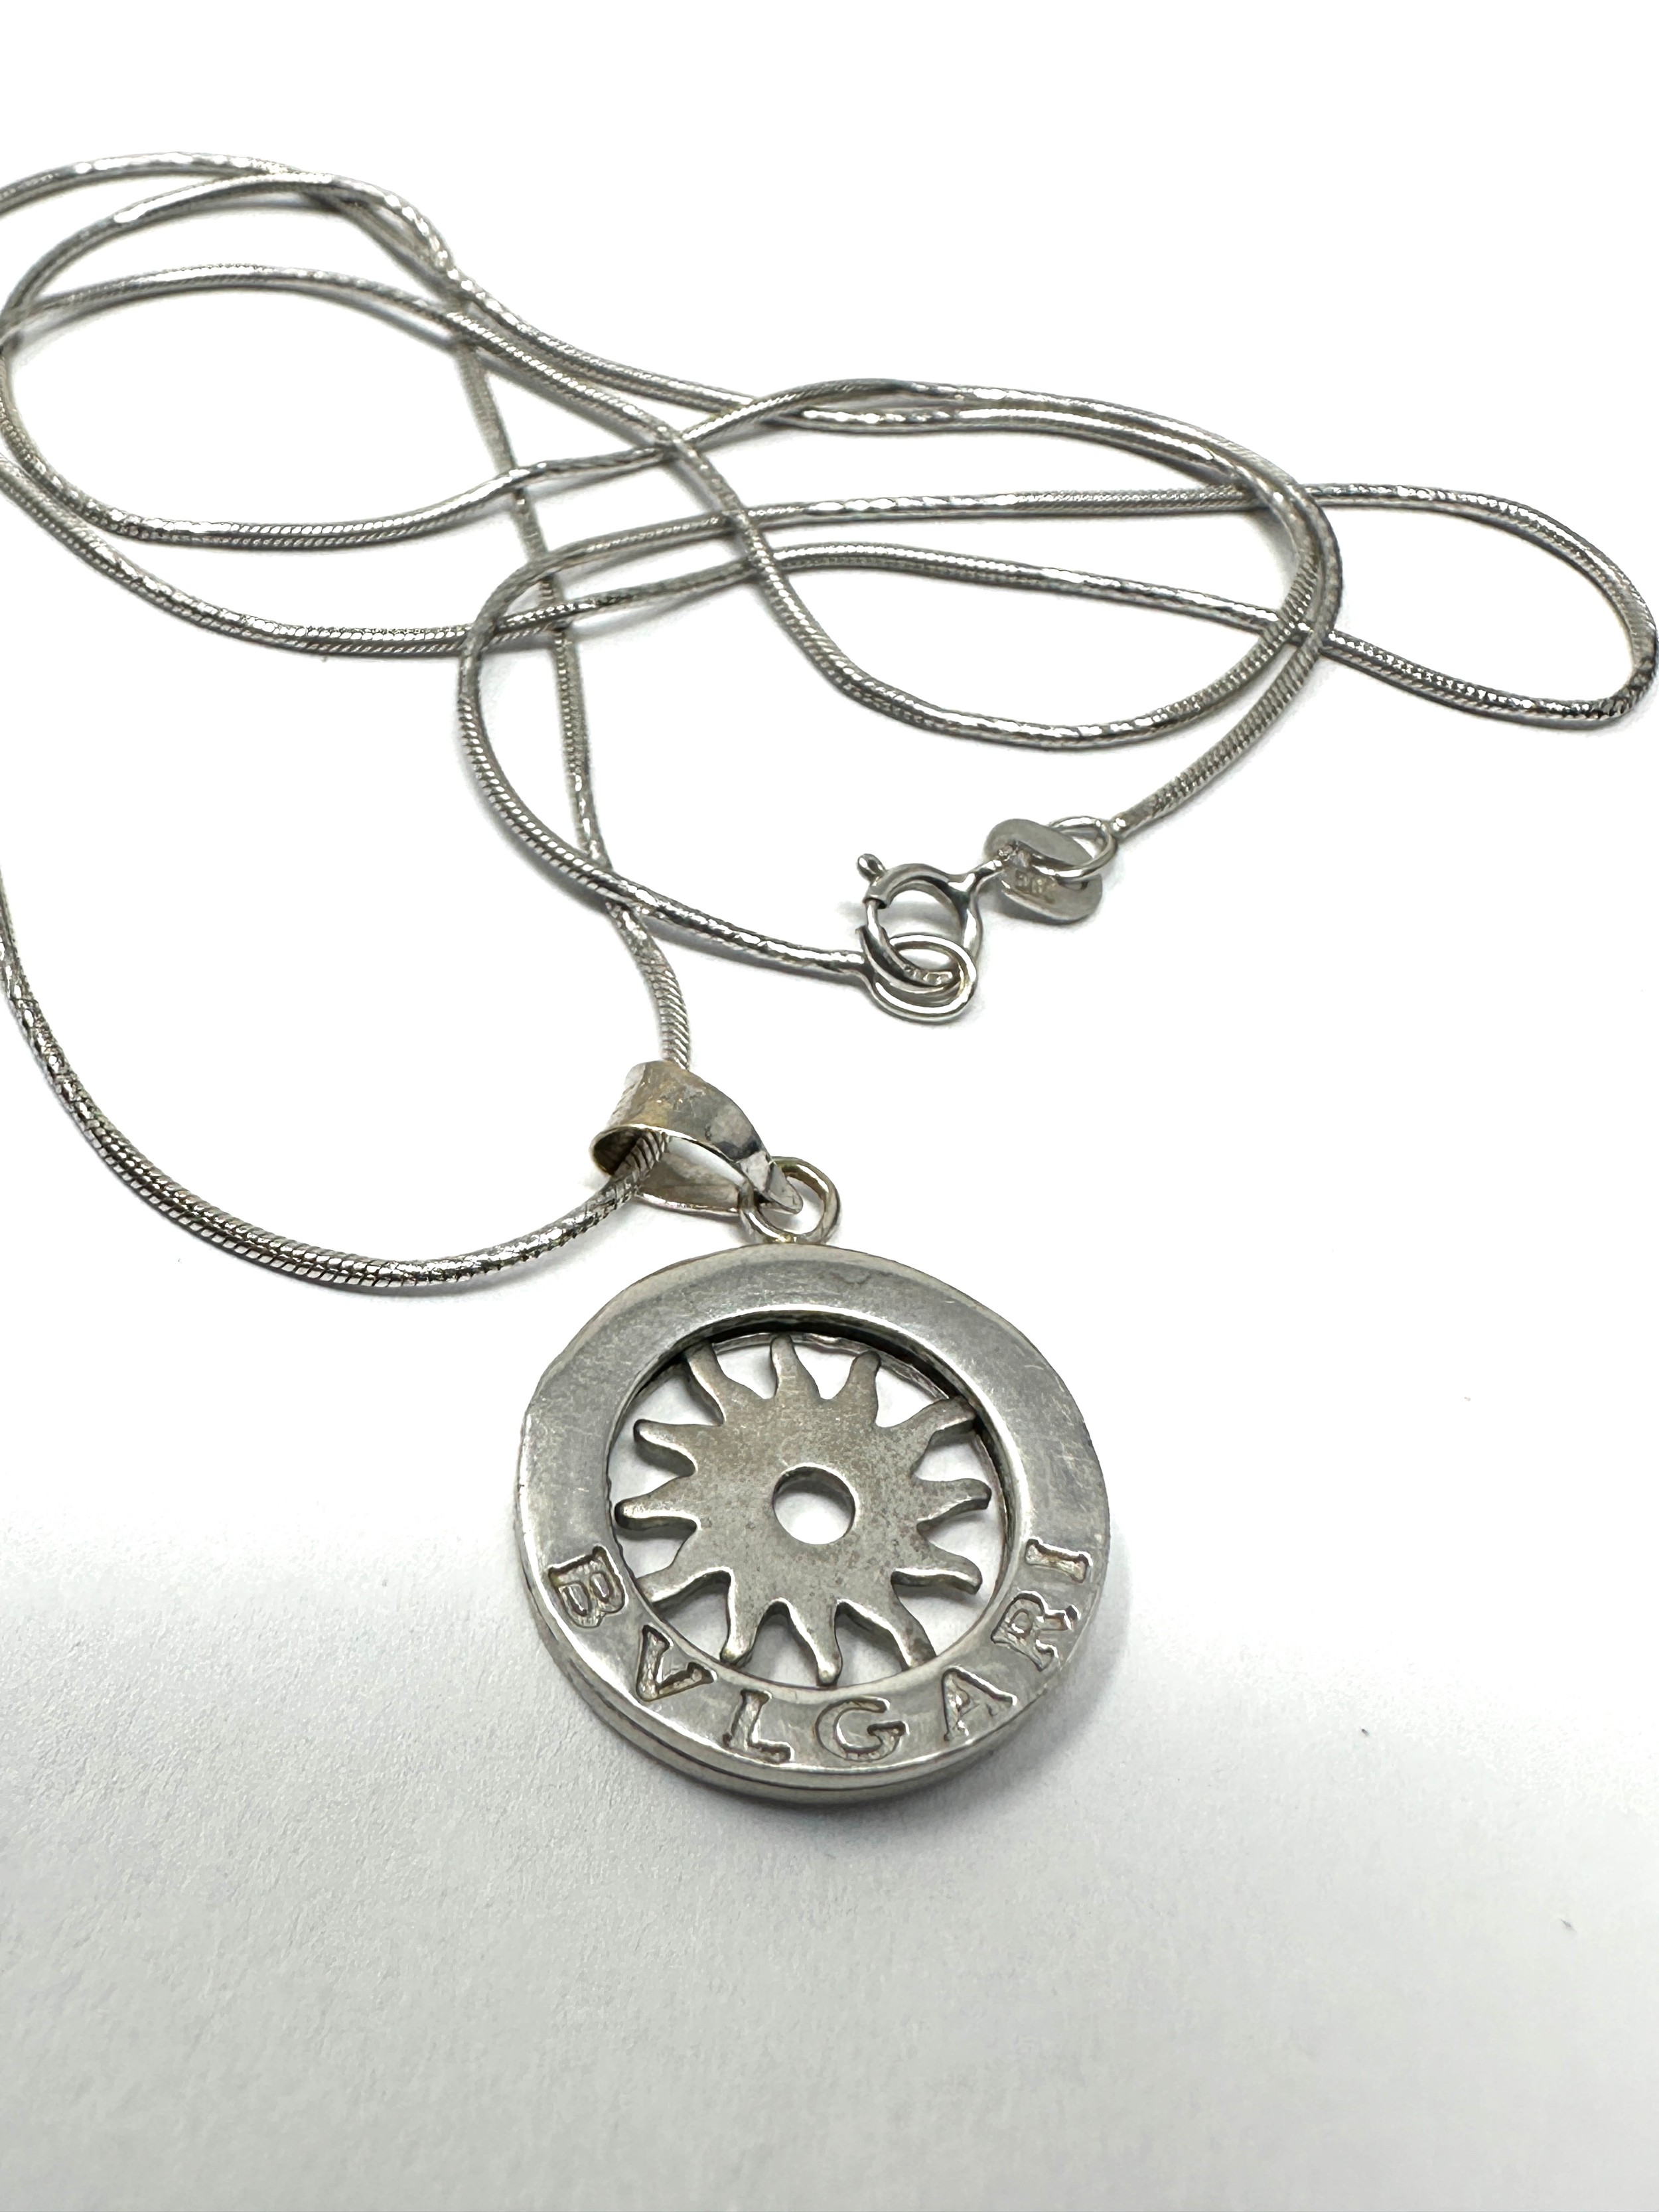 14ct white gold bvlgari spinning sunburst pendant necklace (5g) - Image 2 of 2